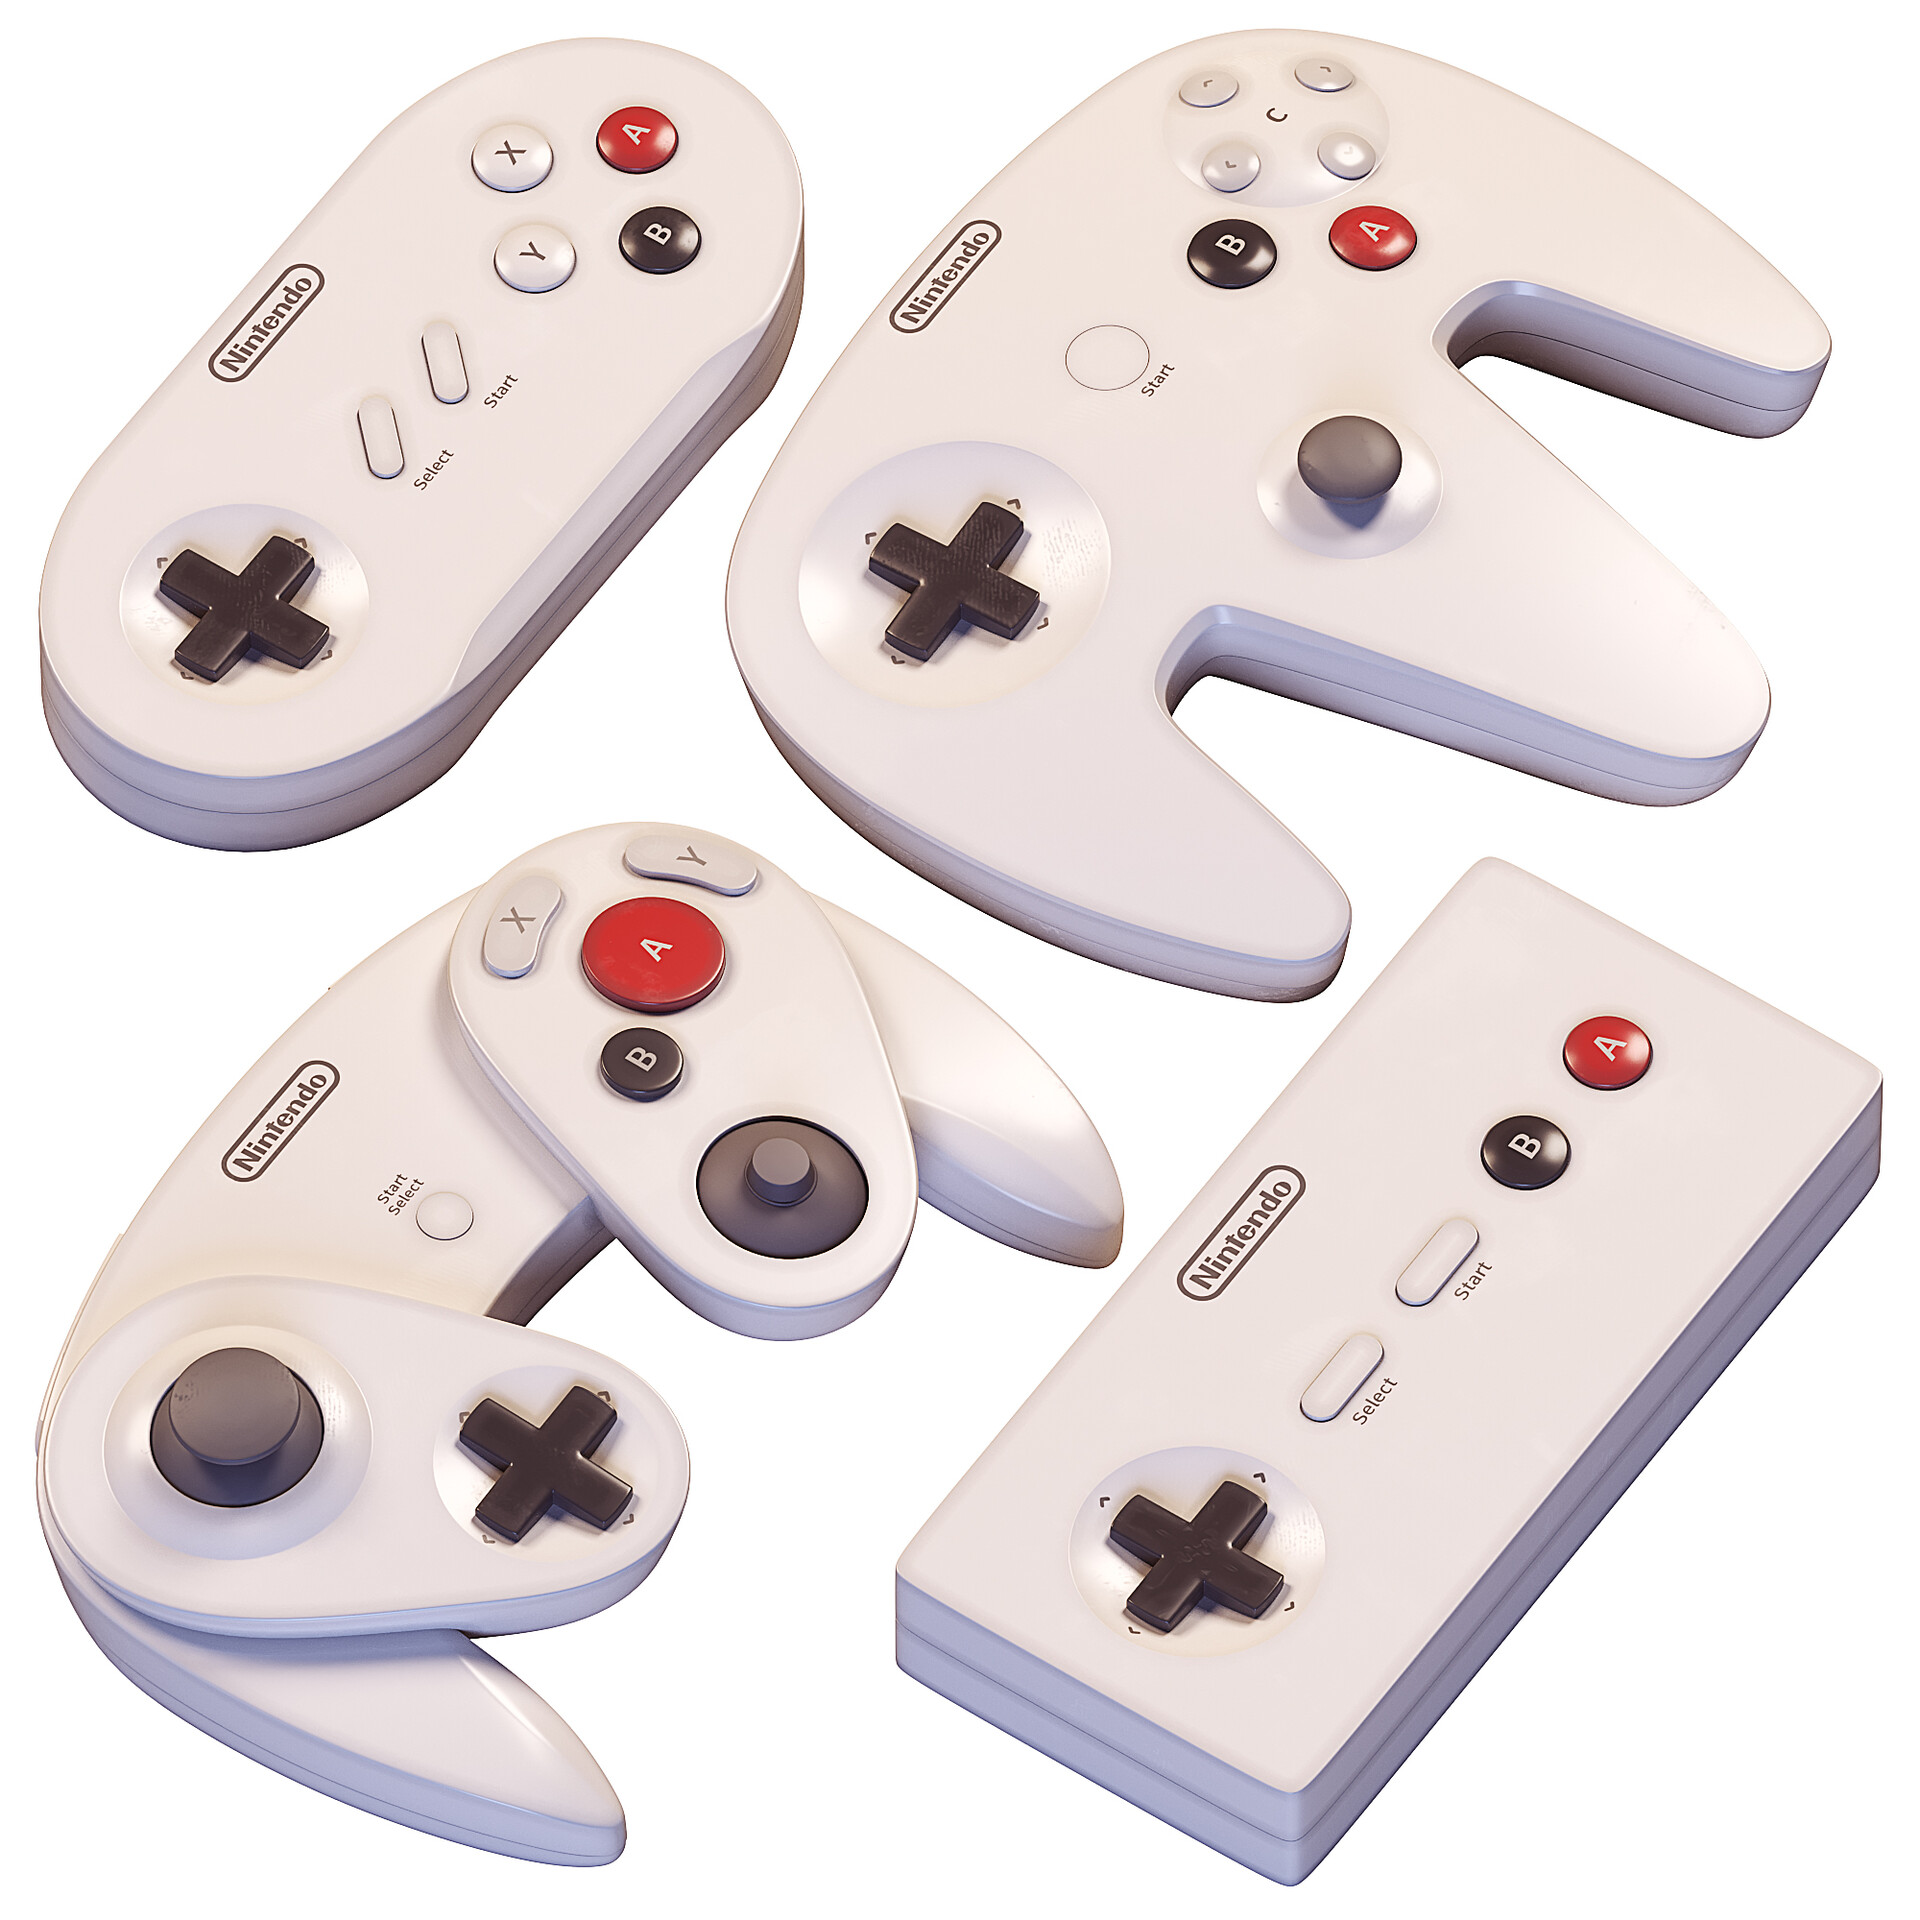 Nintendo control. Нинтендо Controller. 3 Prong Controller Nintendo. Nintendo Controllers and Consoles. Нинтендо контроллер для файтинга.